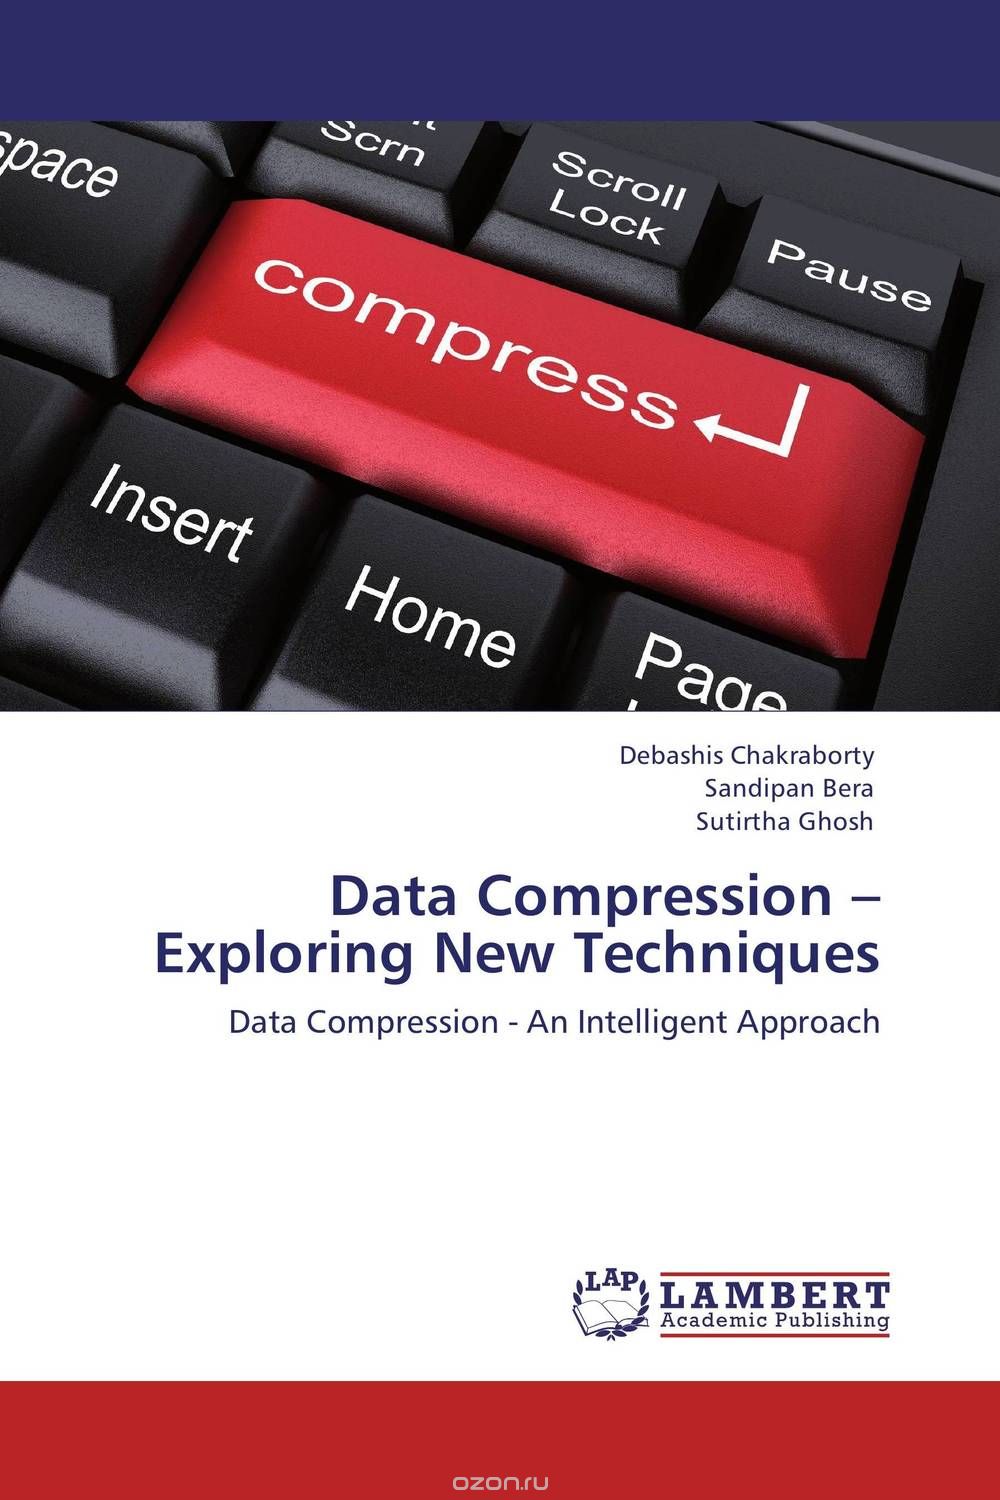 Скачать книгу "Data Compression – Exploring New Techniques"